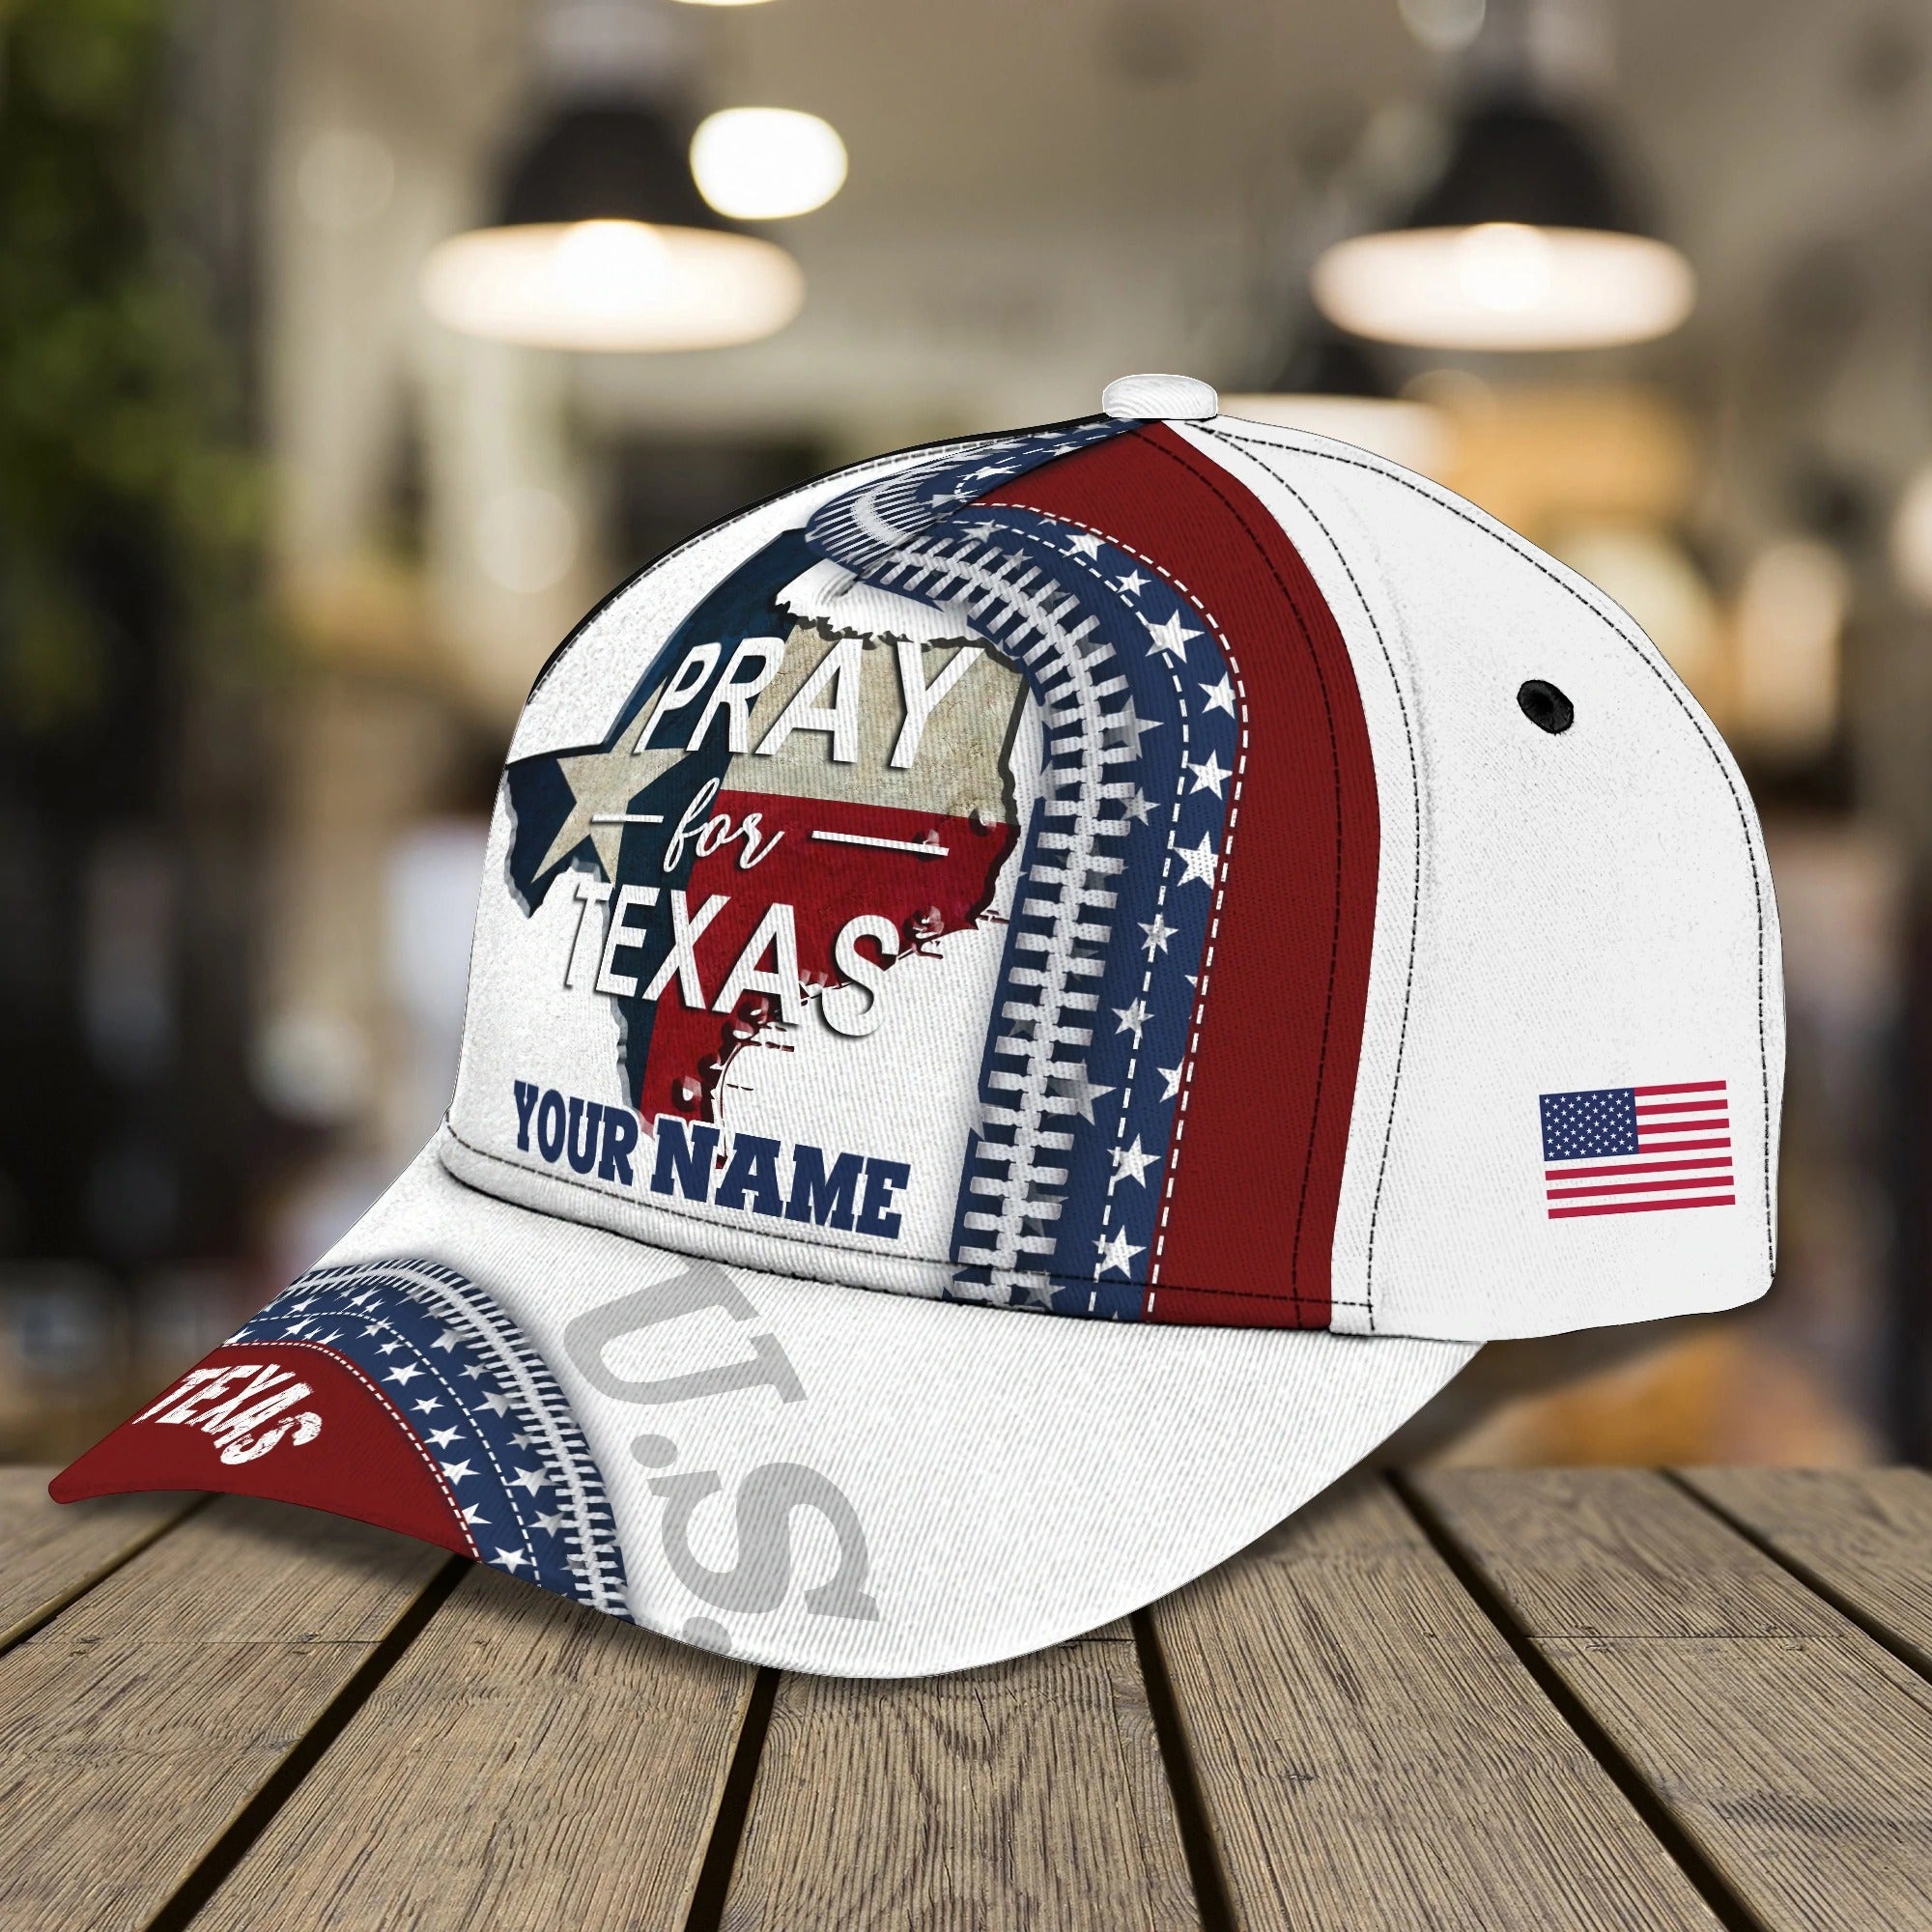 Personalized 3D All Over Print Texas Cap/ Baseball Cap God Bless Texas/ Pray For Texas Cap Hat